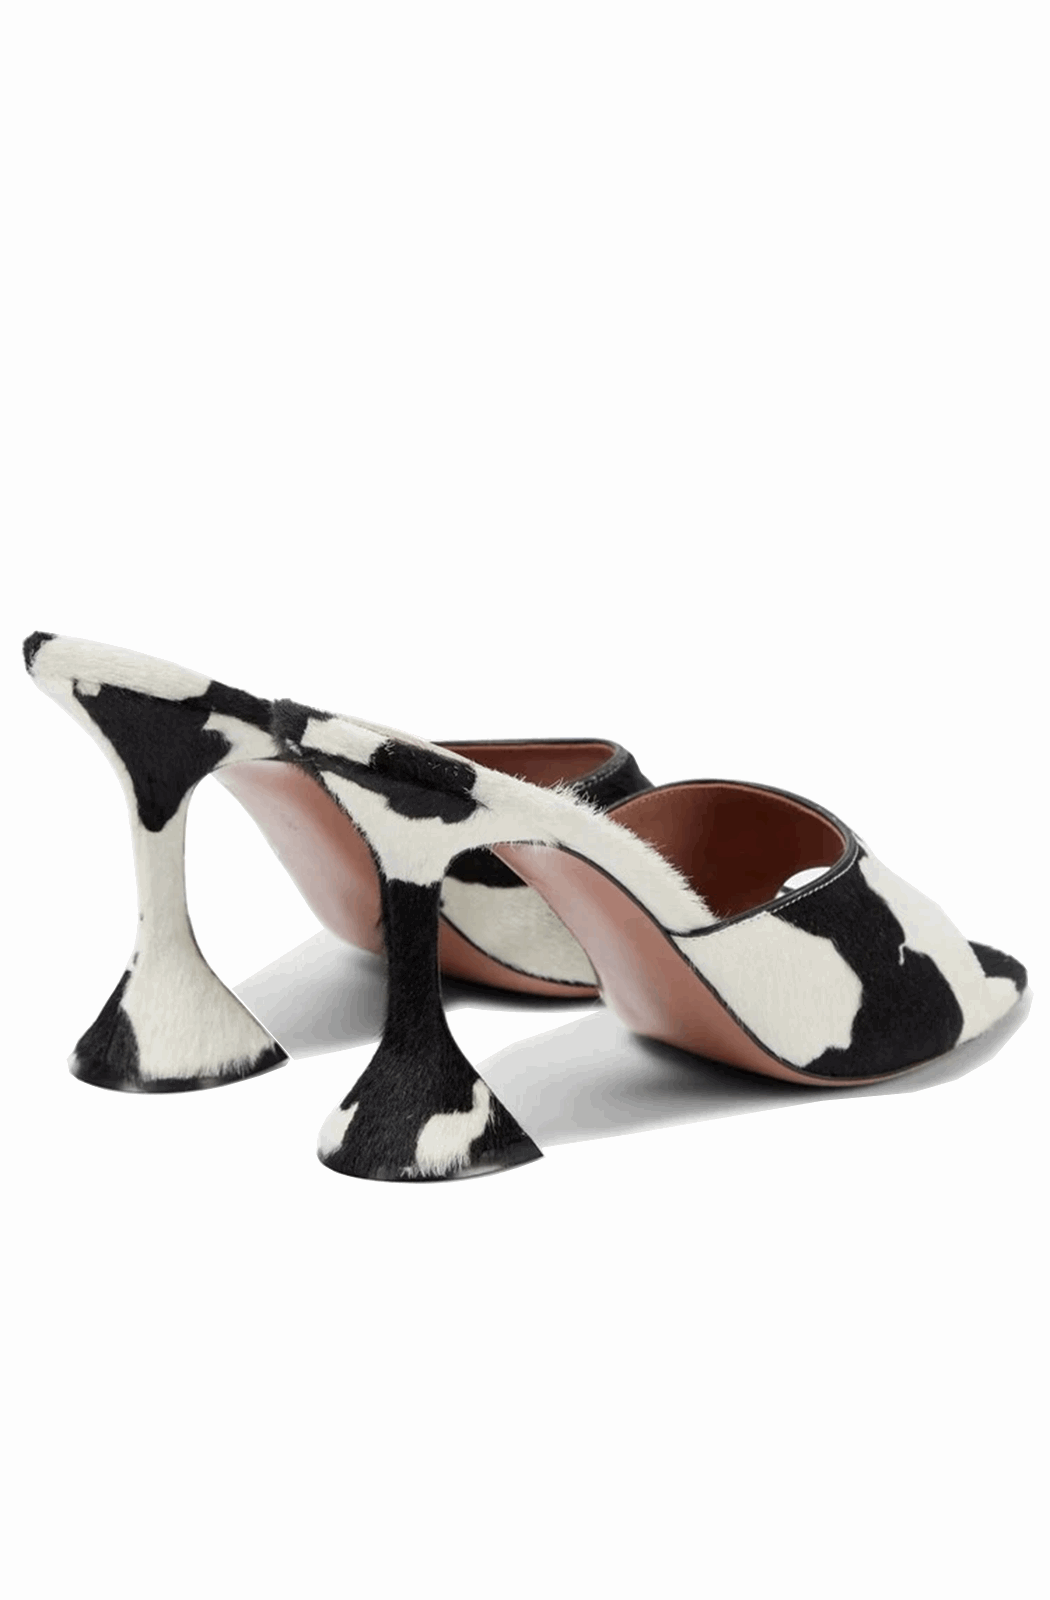 Cow print heeled sandals